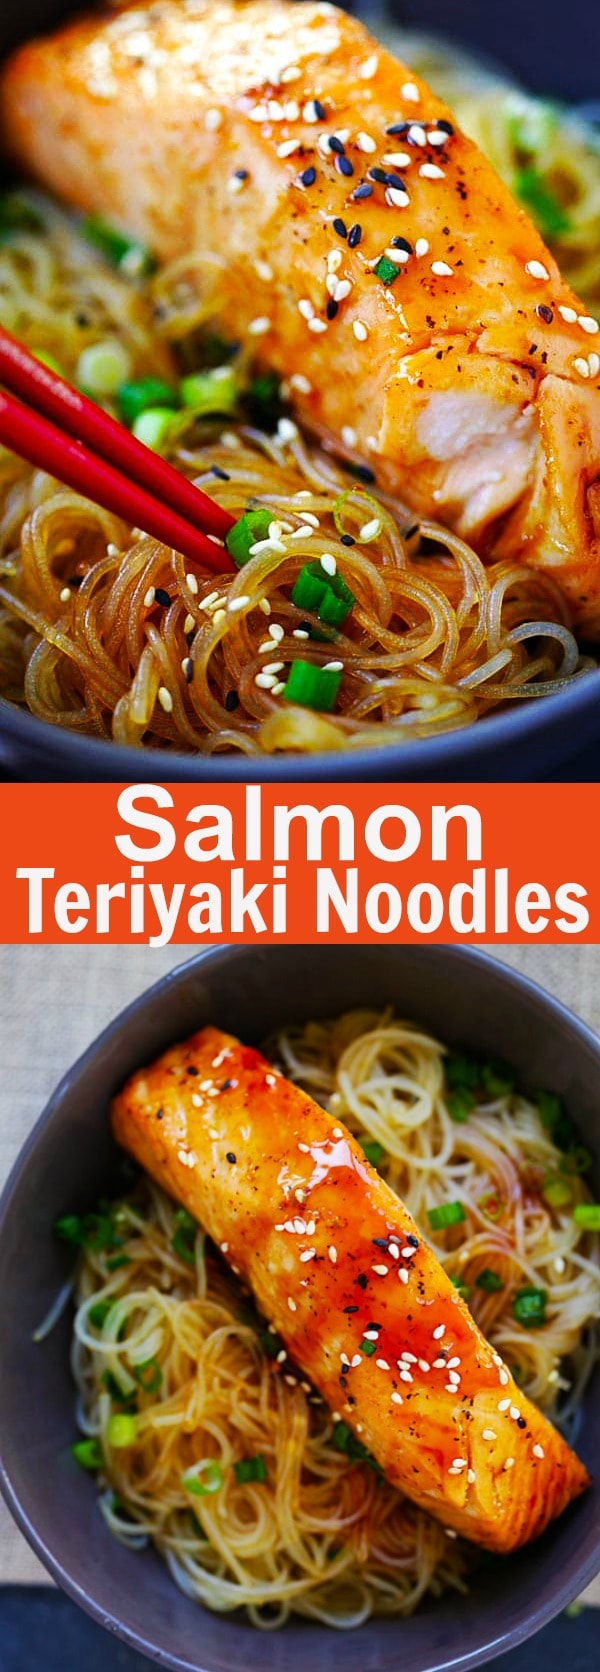 Salmon Teriyaki Noodles – moist and juicy salmon and rice noodles made with San-J Tamari. Gluten-free, healthy family weeknight dinner | rasamalaysia.com